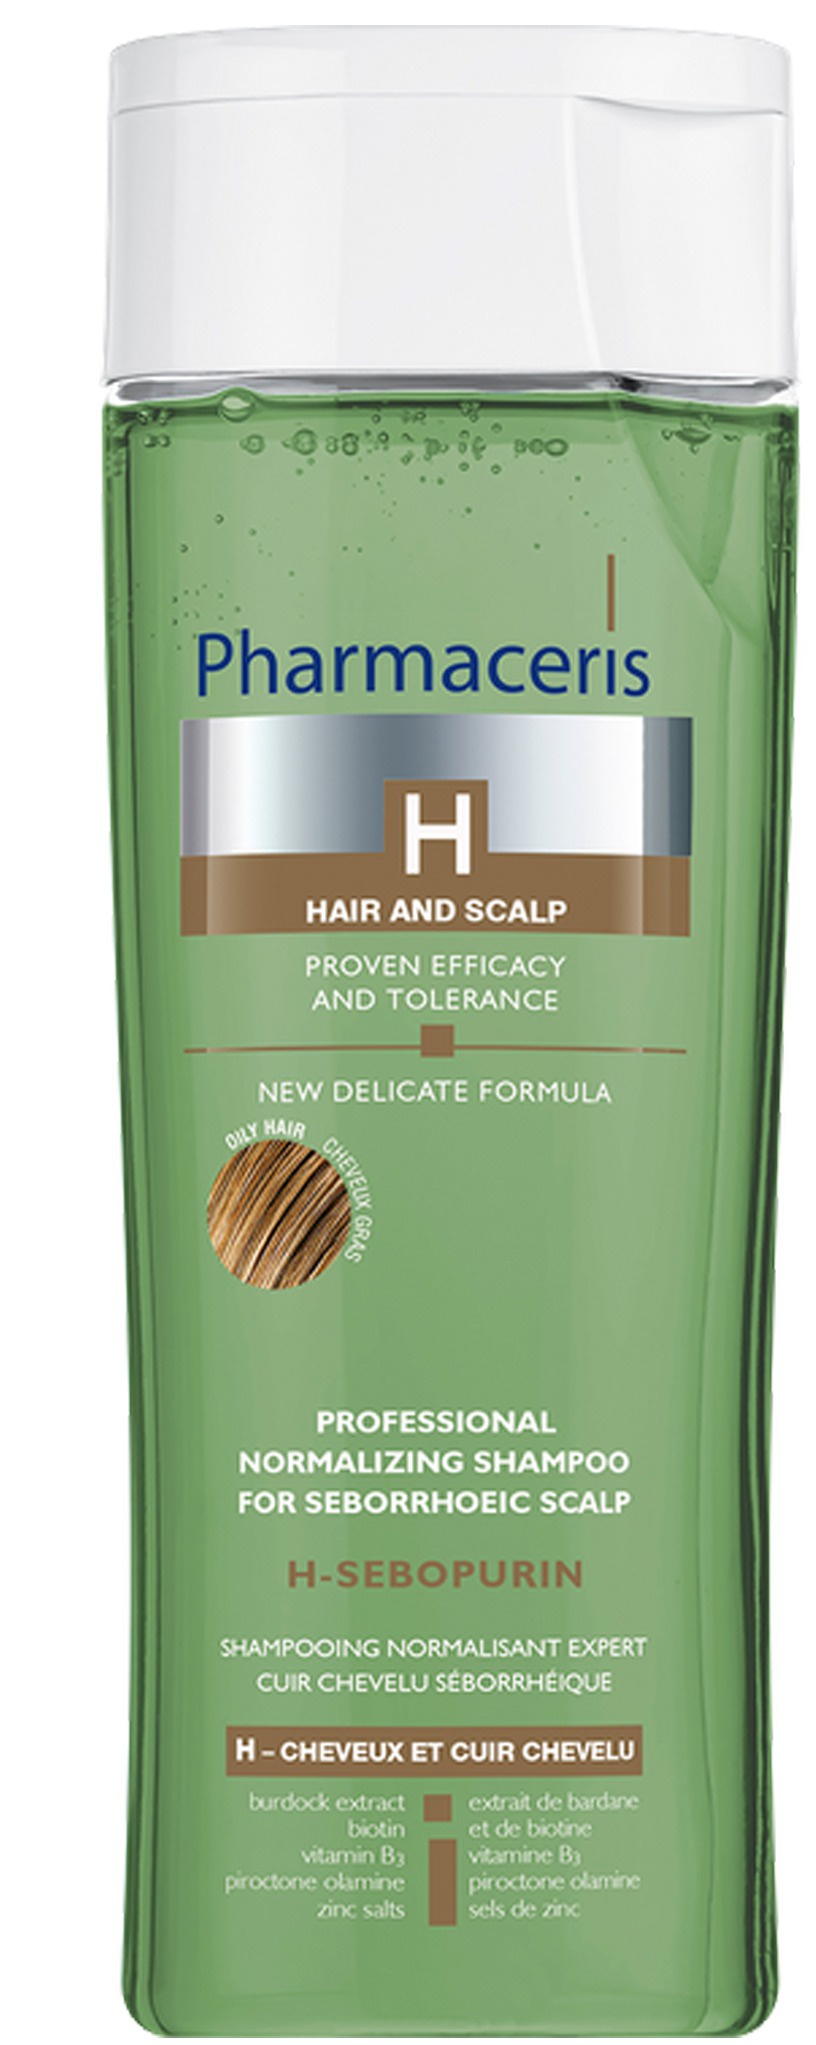 Pharmaceris H-sebopurin – Professional Normalizing Shampoo For Seborrheic Scalp